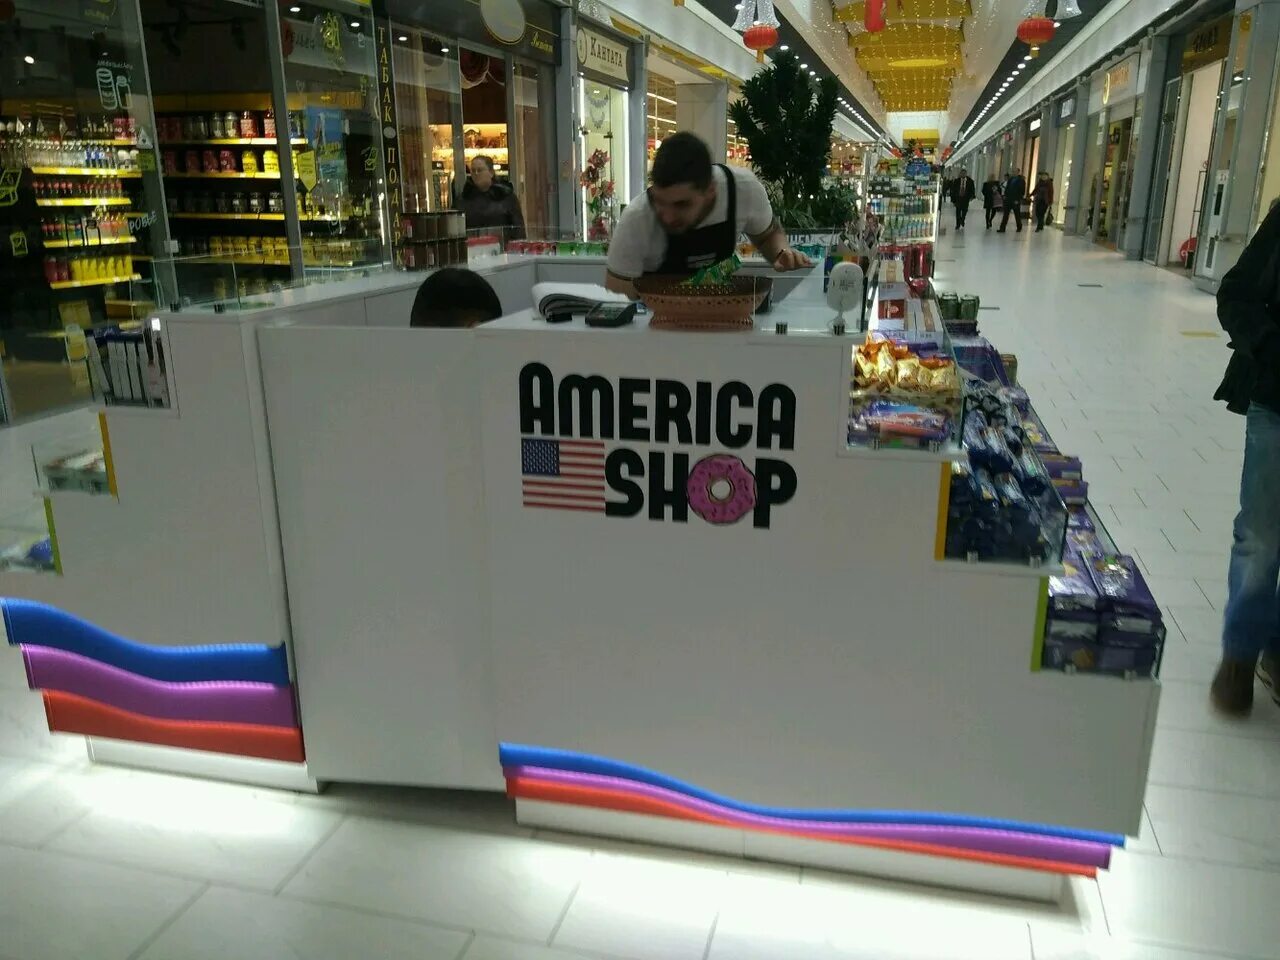 Америка шоп. America shop этажи. Америка шоп магазин сладостей СПБ. Американ шоп Ижевск.